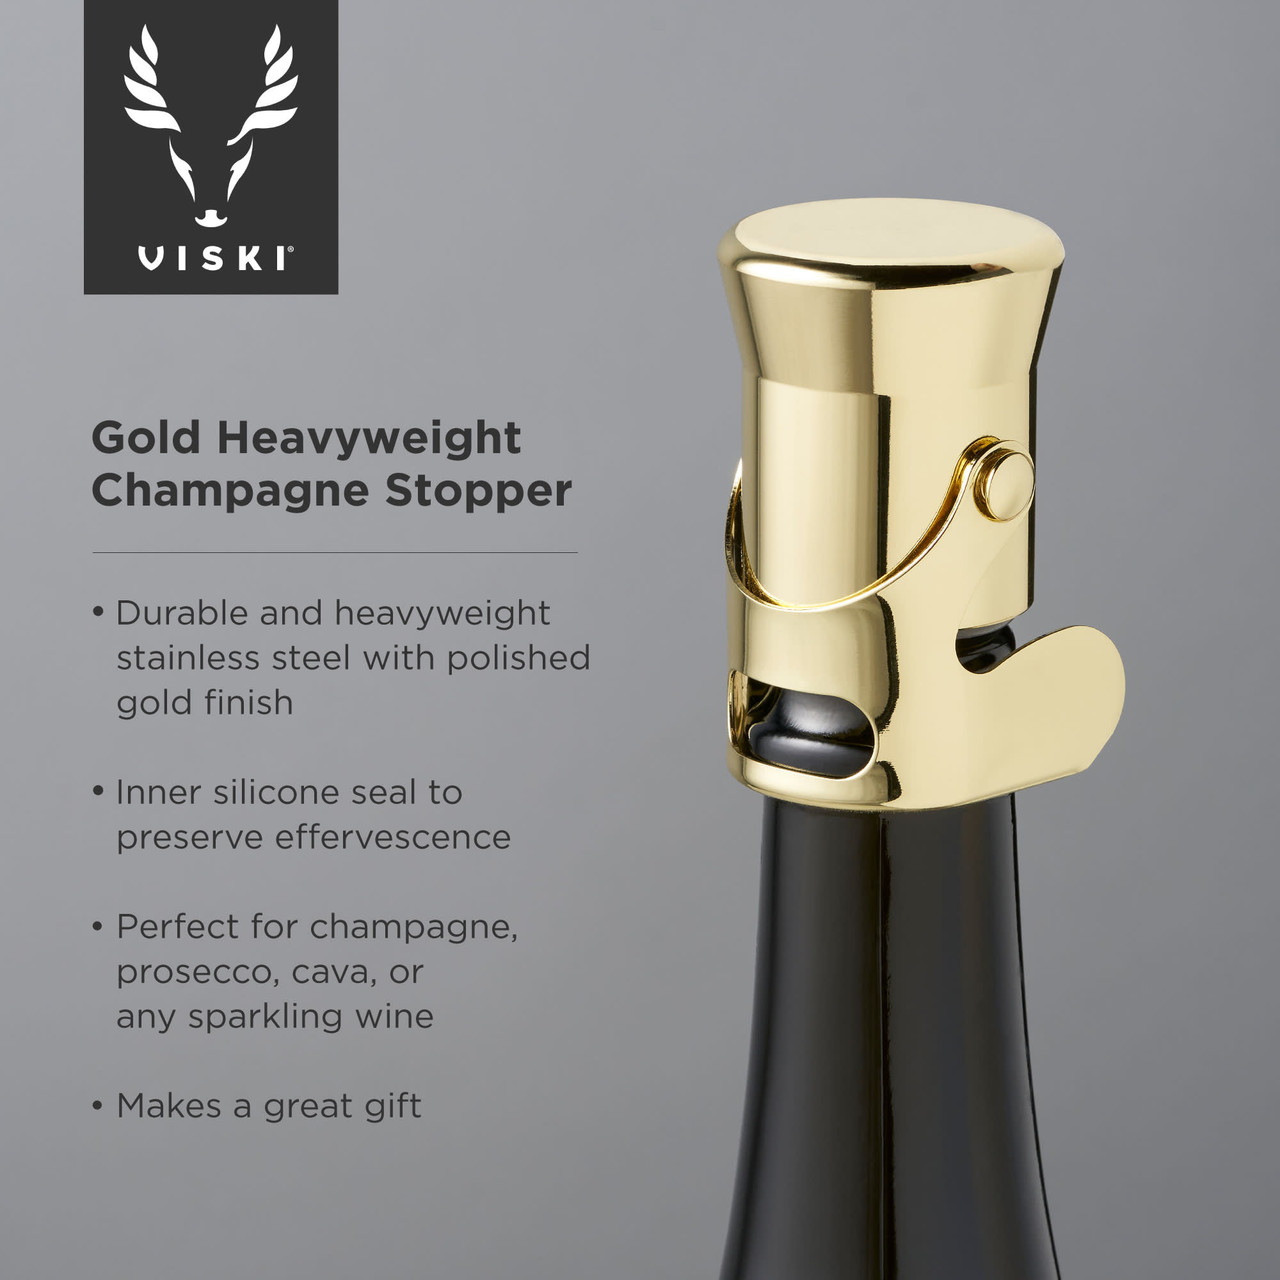 Gold Heavyweight Champagne Stopper by Viski®